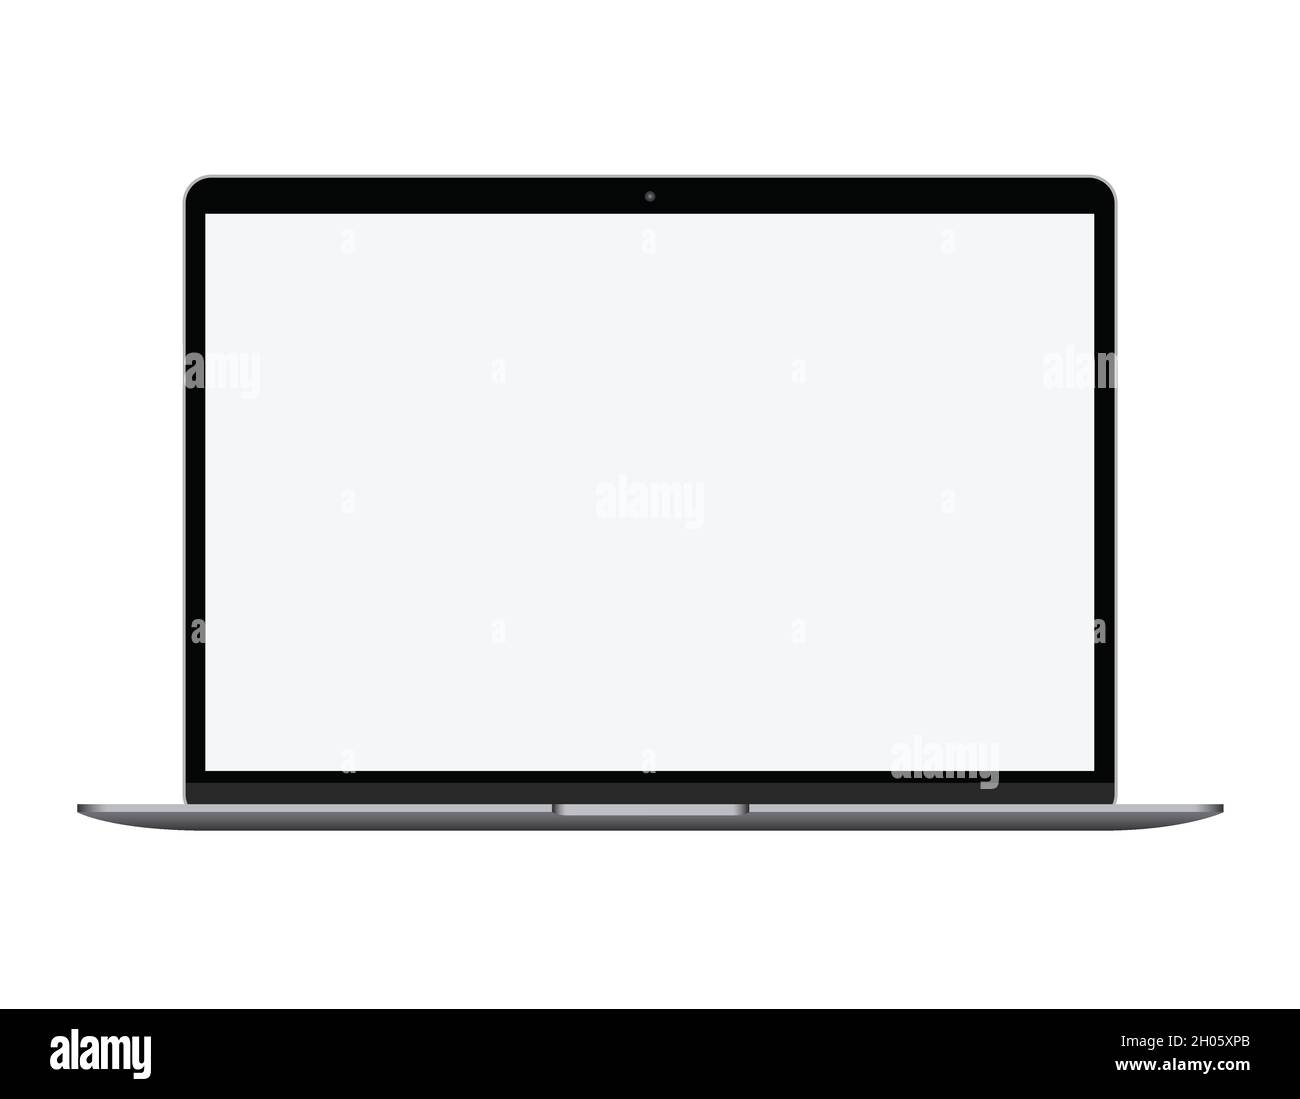 Modern new model macbook air space grey notebook, flat design laptop vector stock illustration Stock Vector